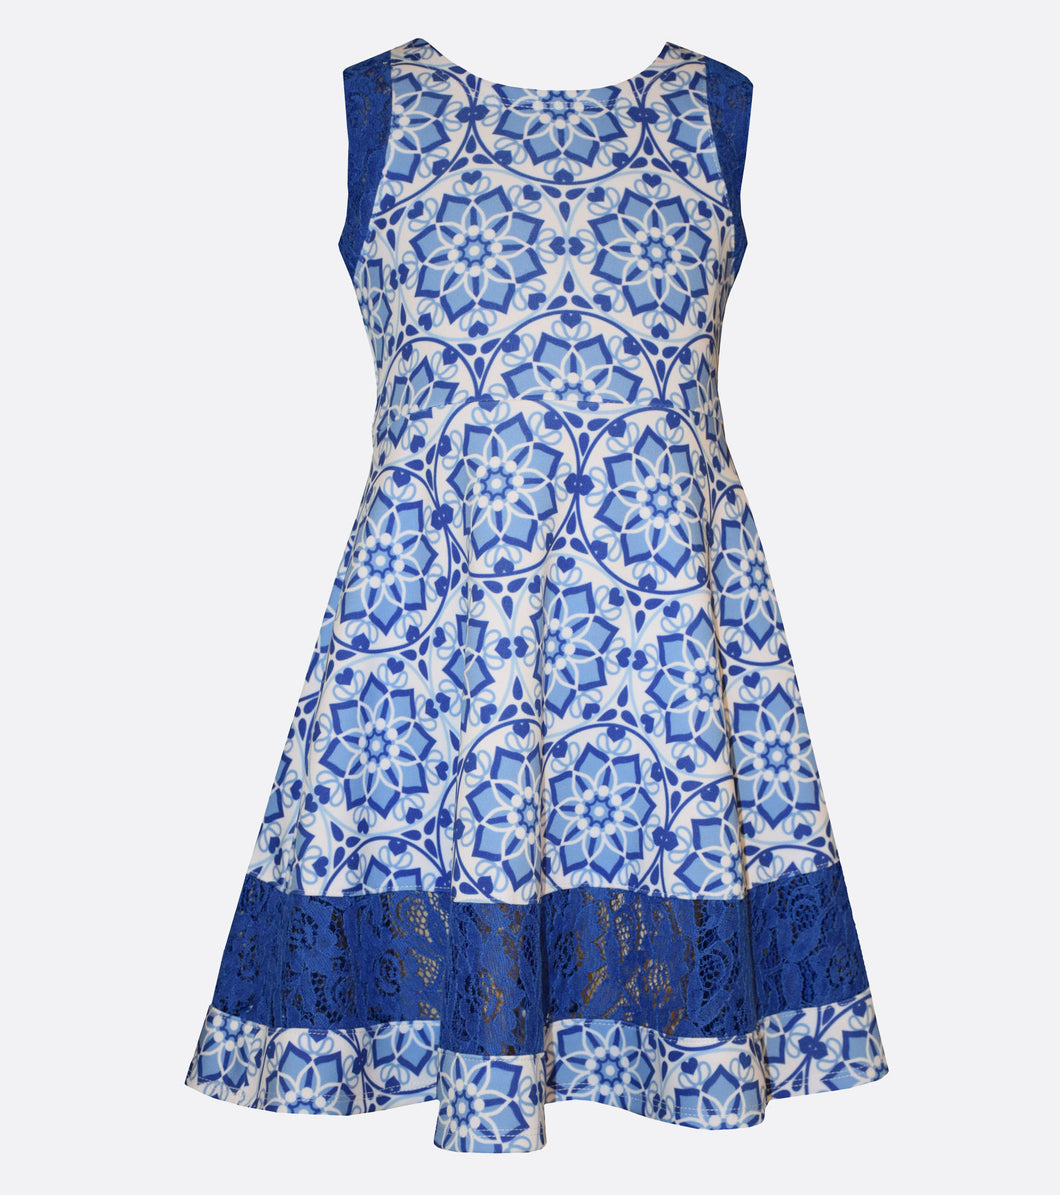 Bonnie Jean Mandala Print Dress with Lace Inserts